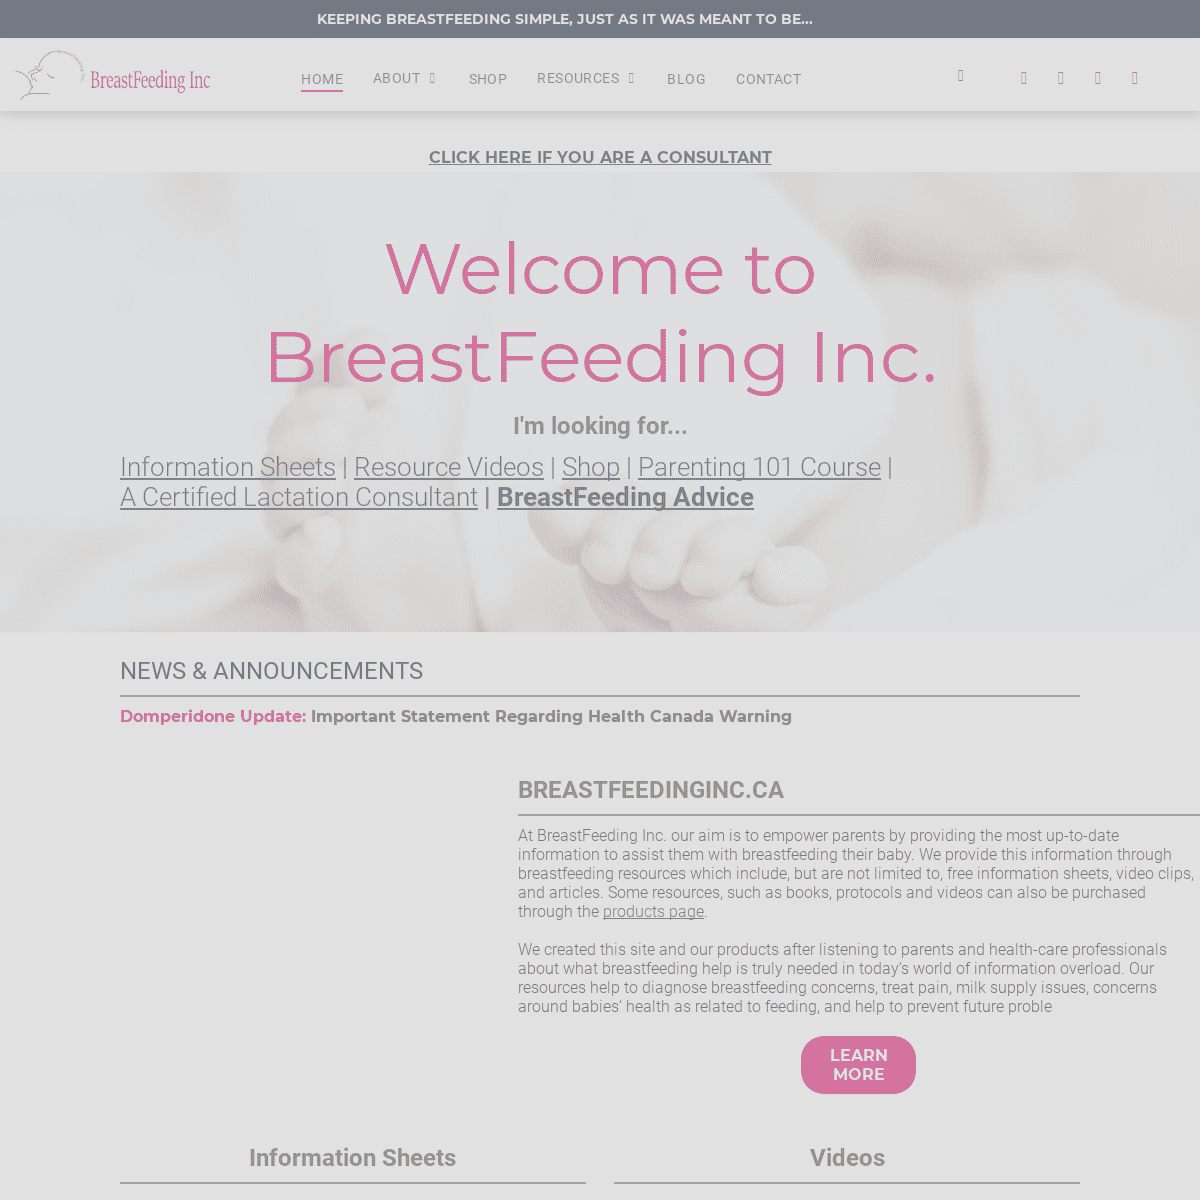 A complete backup of breastfeedinginc.ca